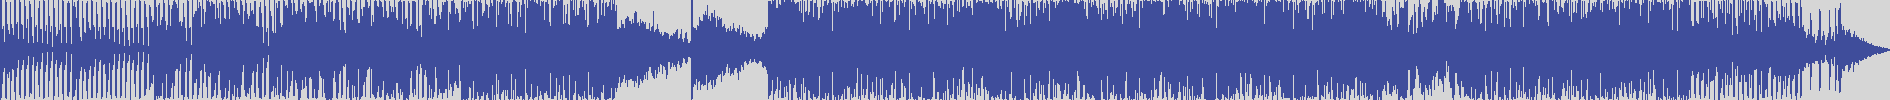 nf_boyz_records [NFY048] Bradley Duncan - Paper Slim [Basement Mix] audio wave form